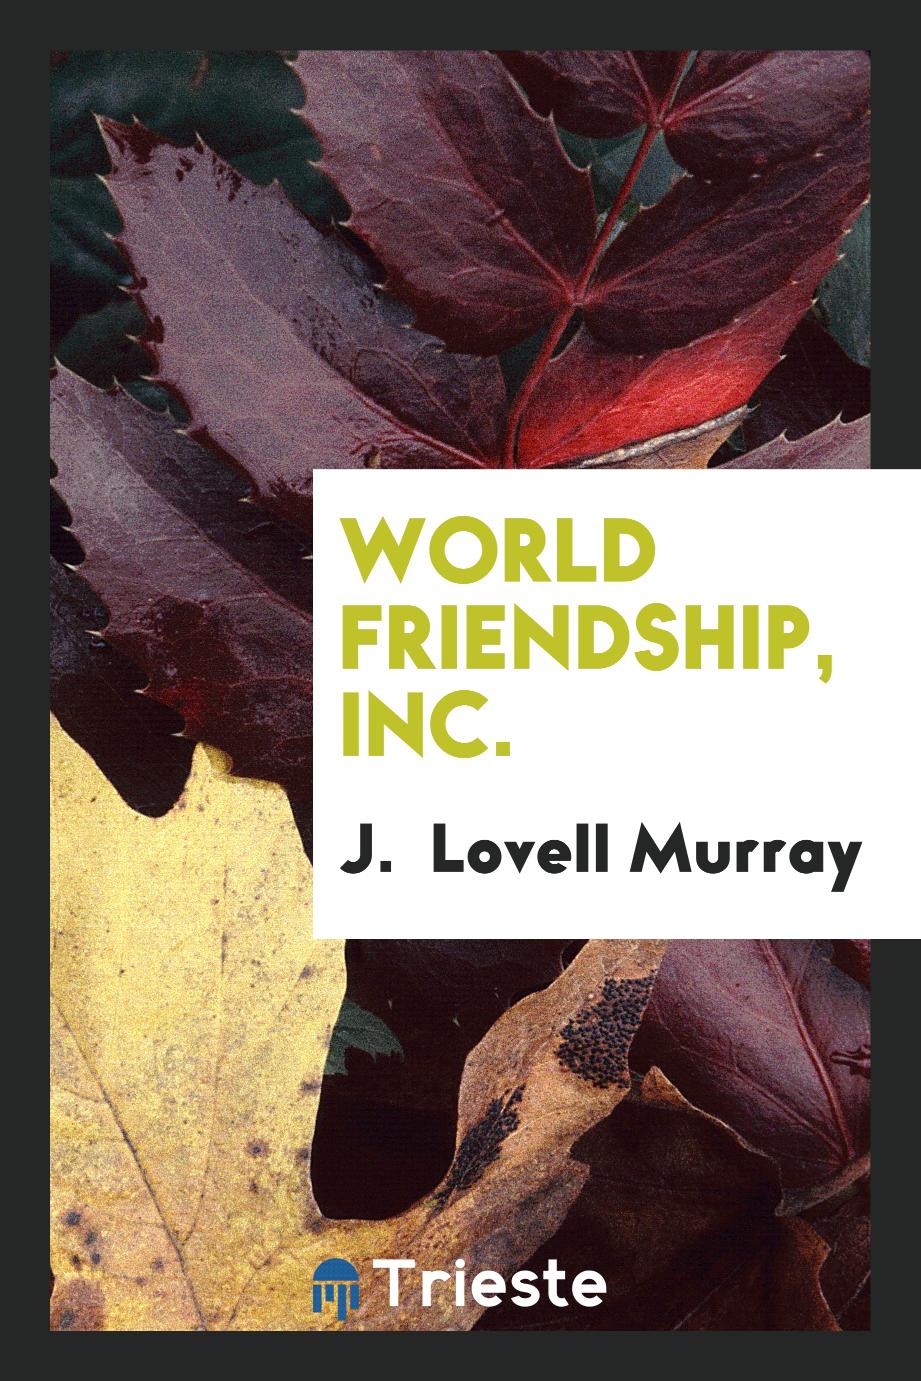 World friendship, Inc.